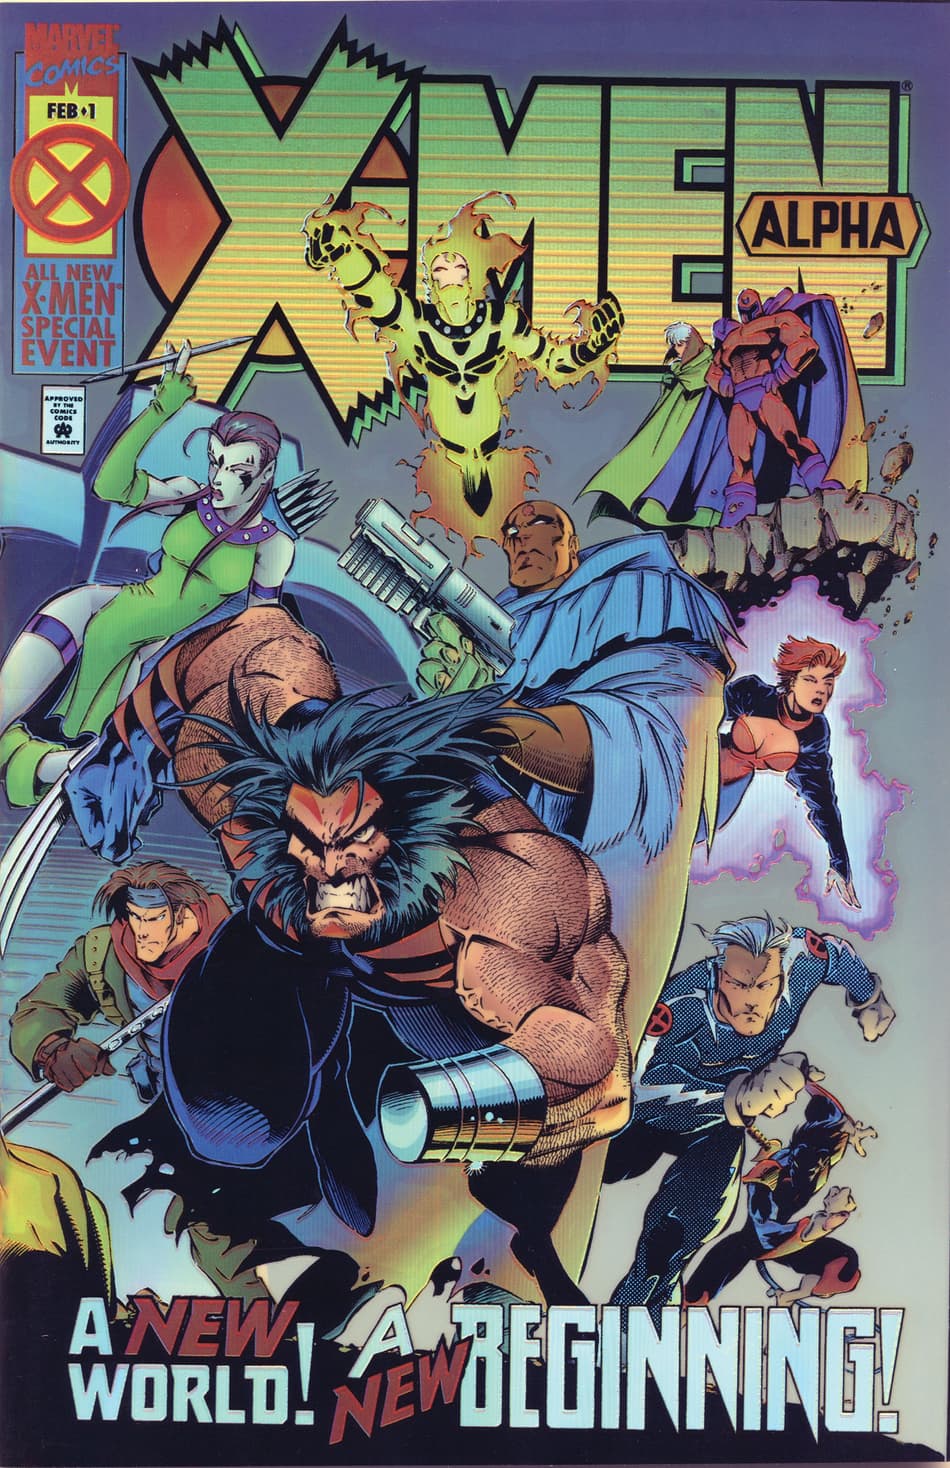 Cover to X-MEN: ALPHA (1995) #1.